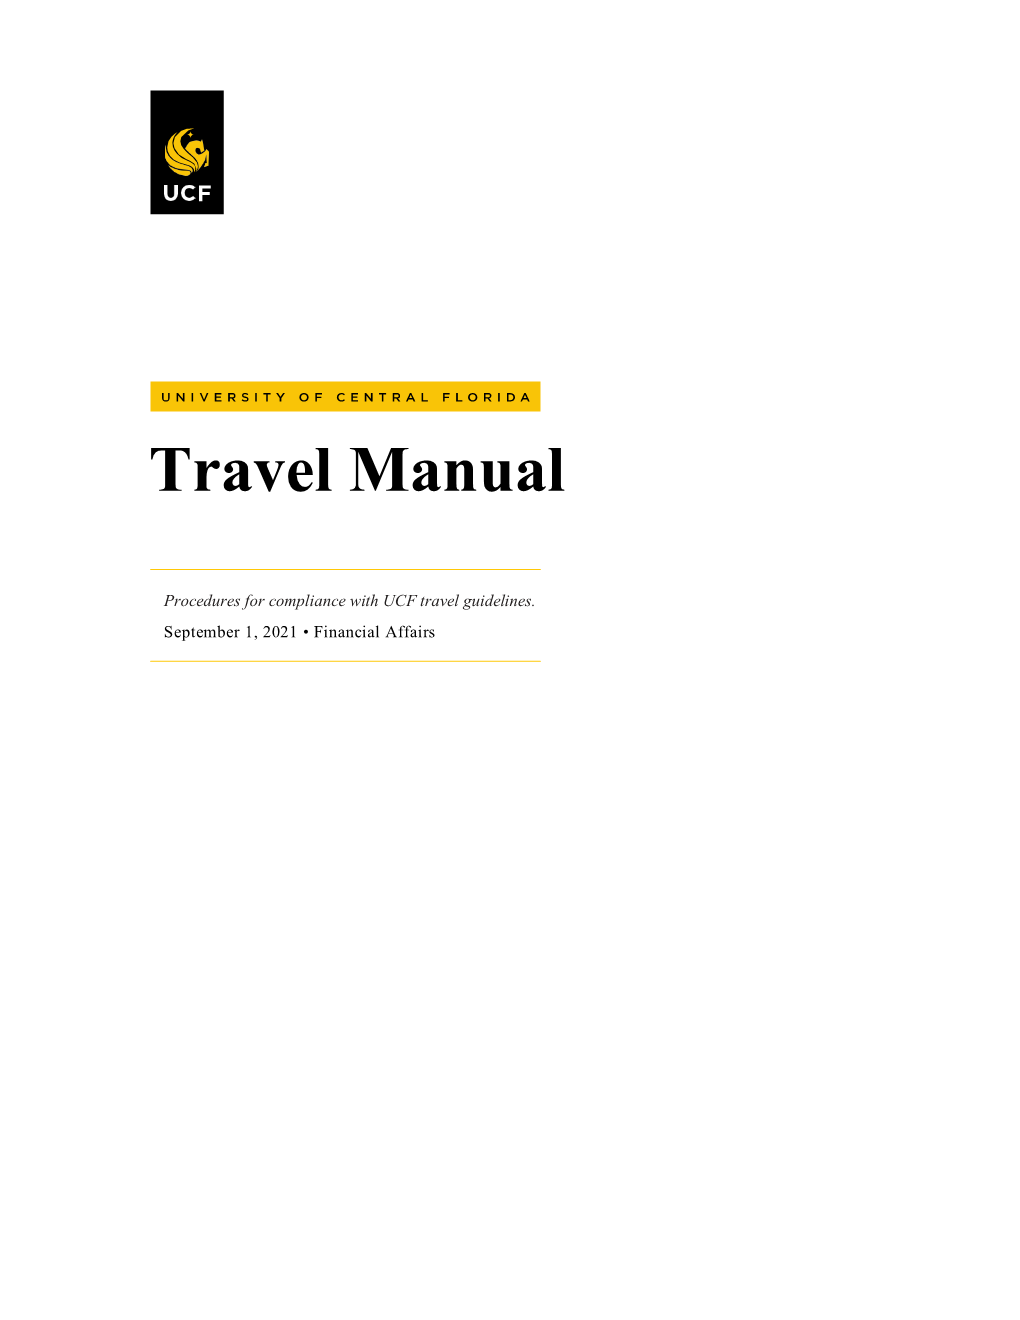 Travel Manual